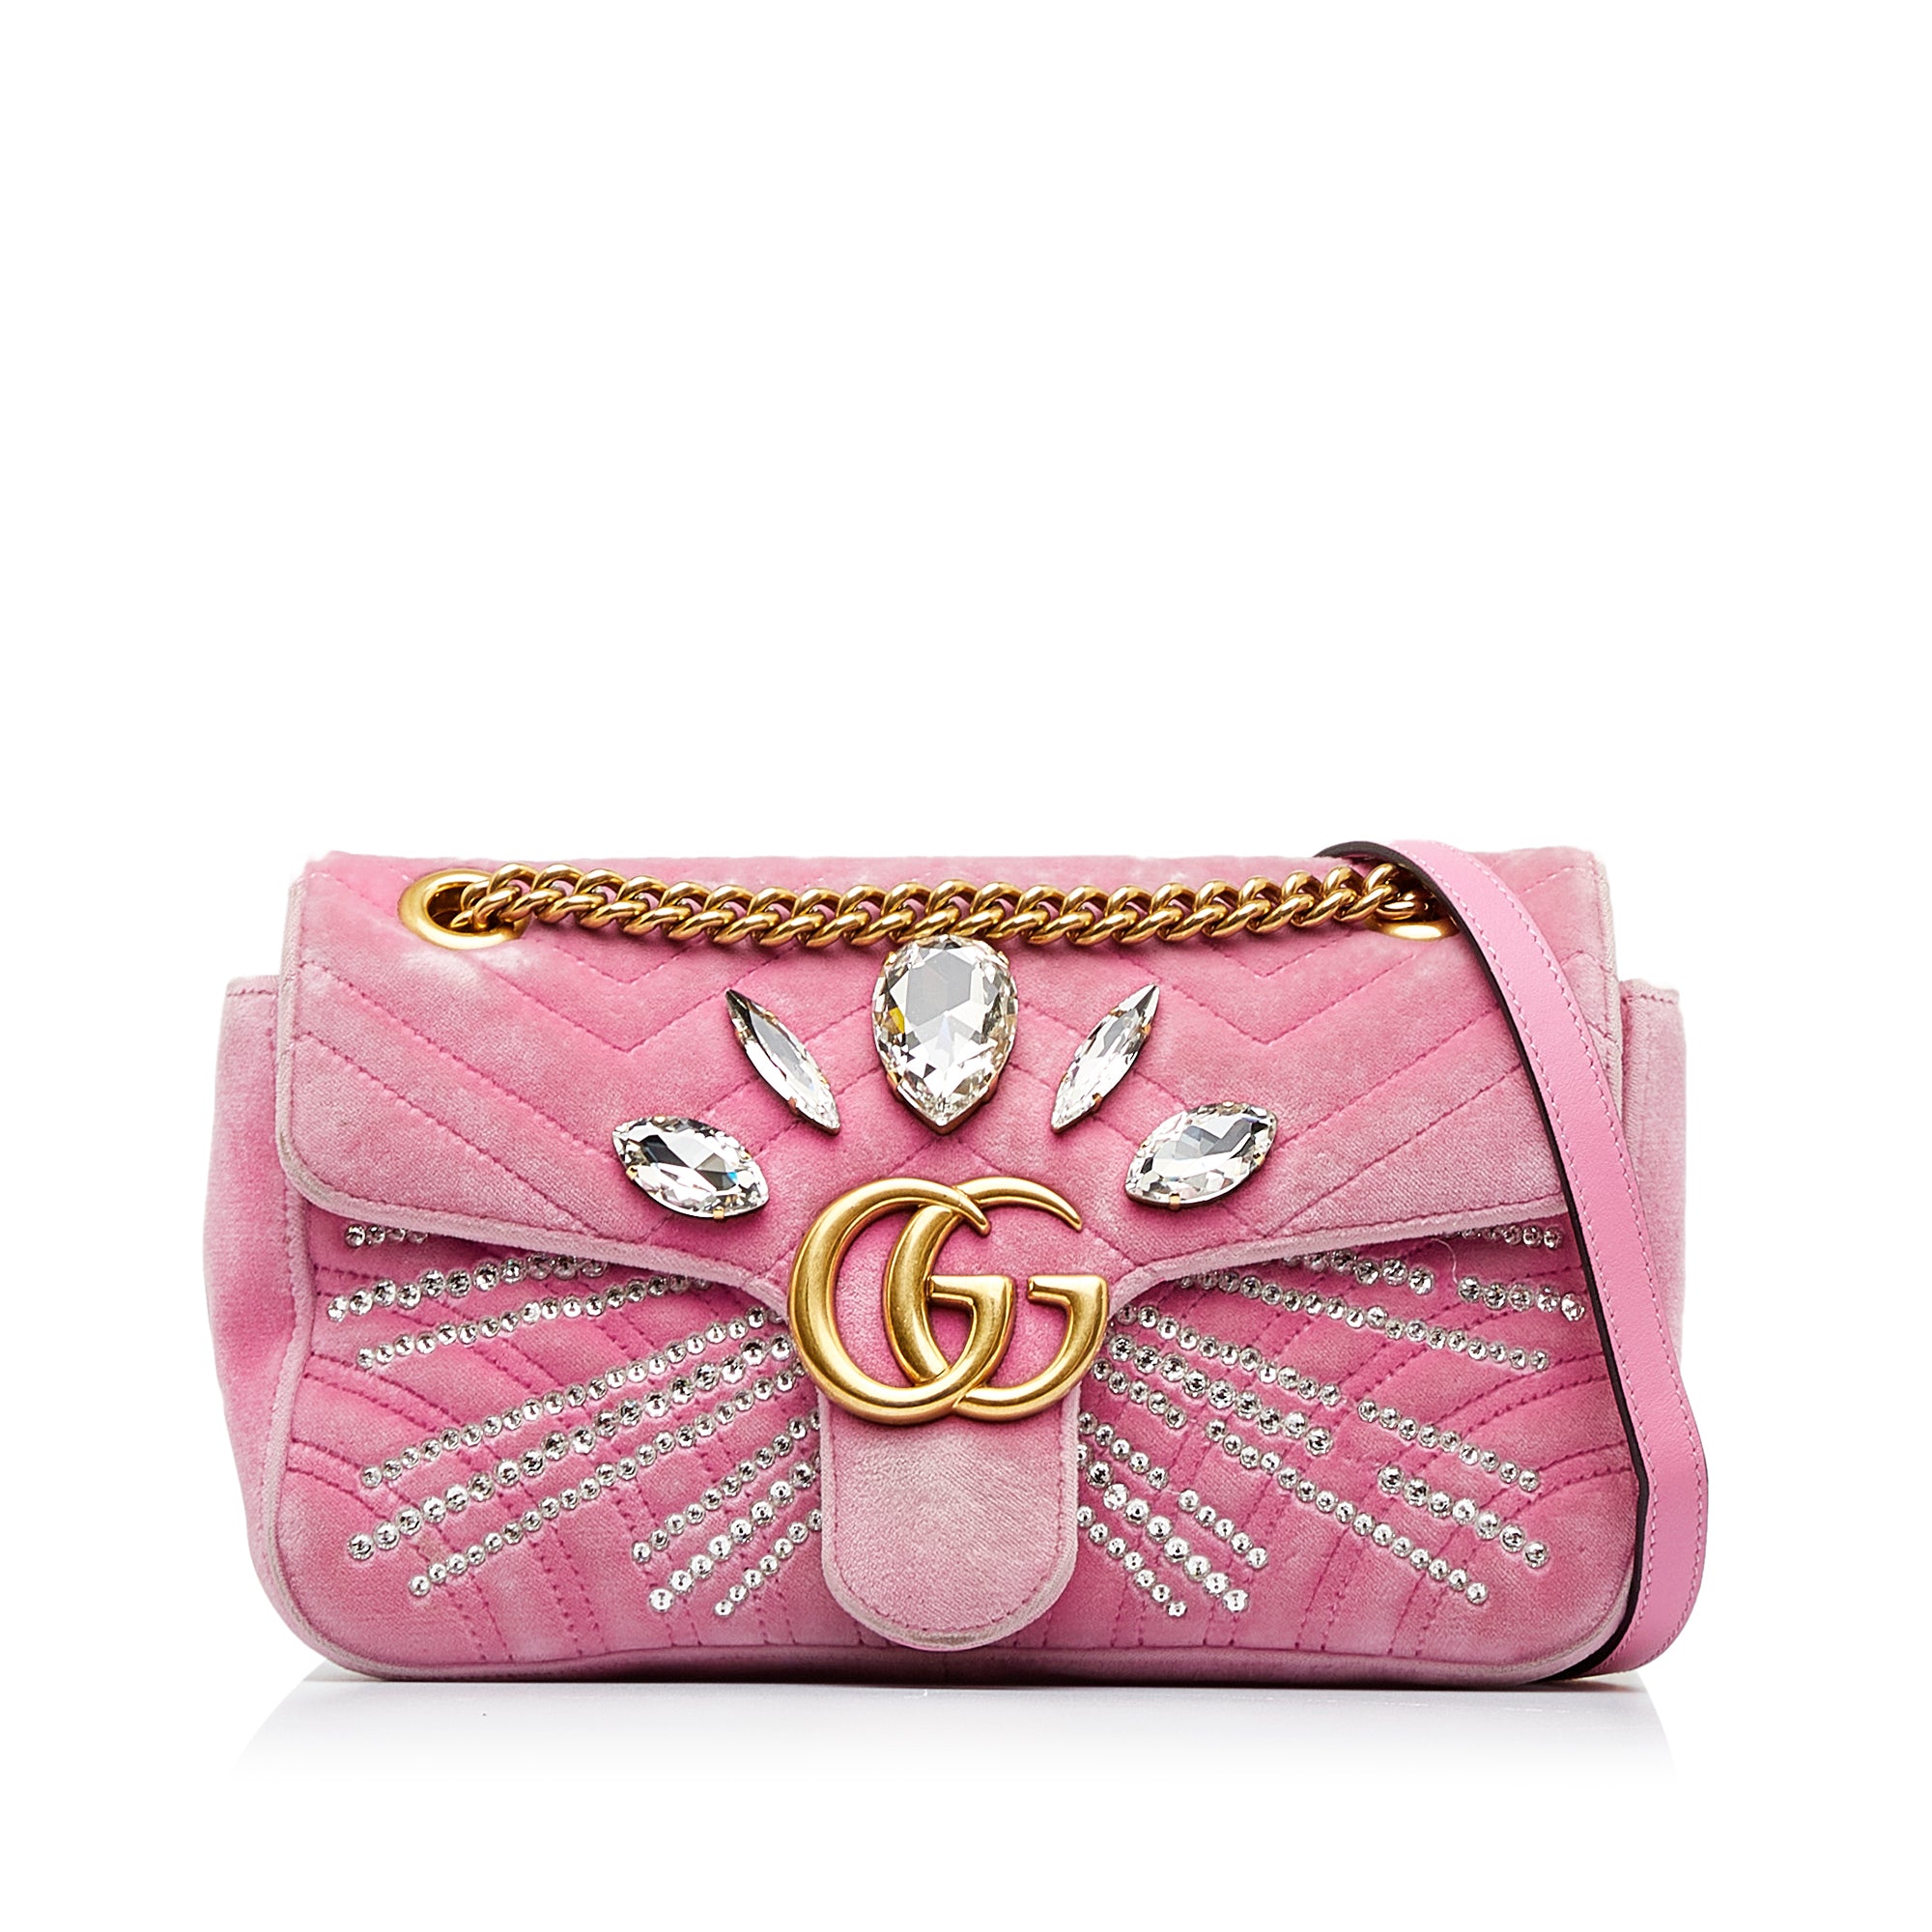 Gucci Matelassé GG Marmont Backpack - Pink Backpacks, Handbags